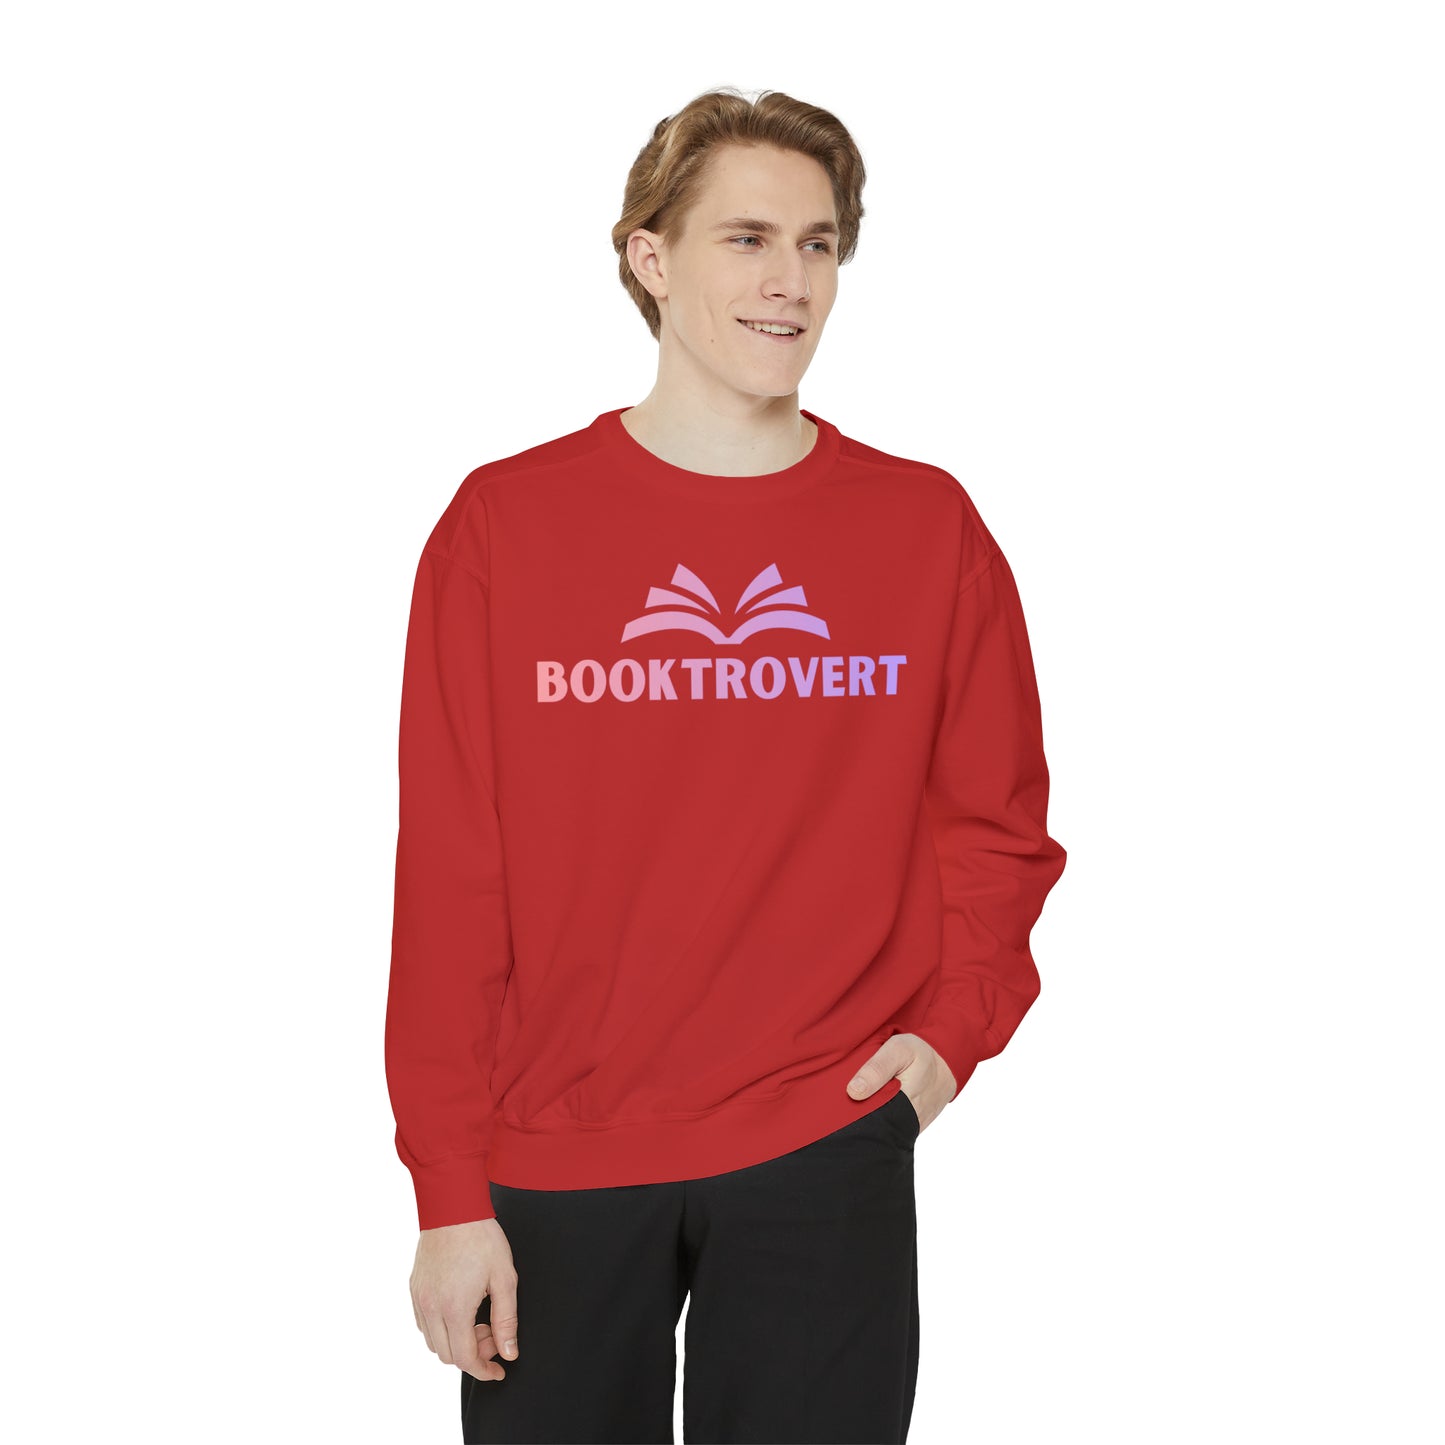 Booktrovert Comfort Colors Sweatshirt, Booktrovert Tshirt Gift, Gift for reader, librarian gift, Bibliophile